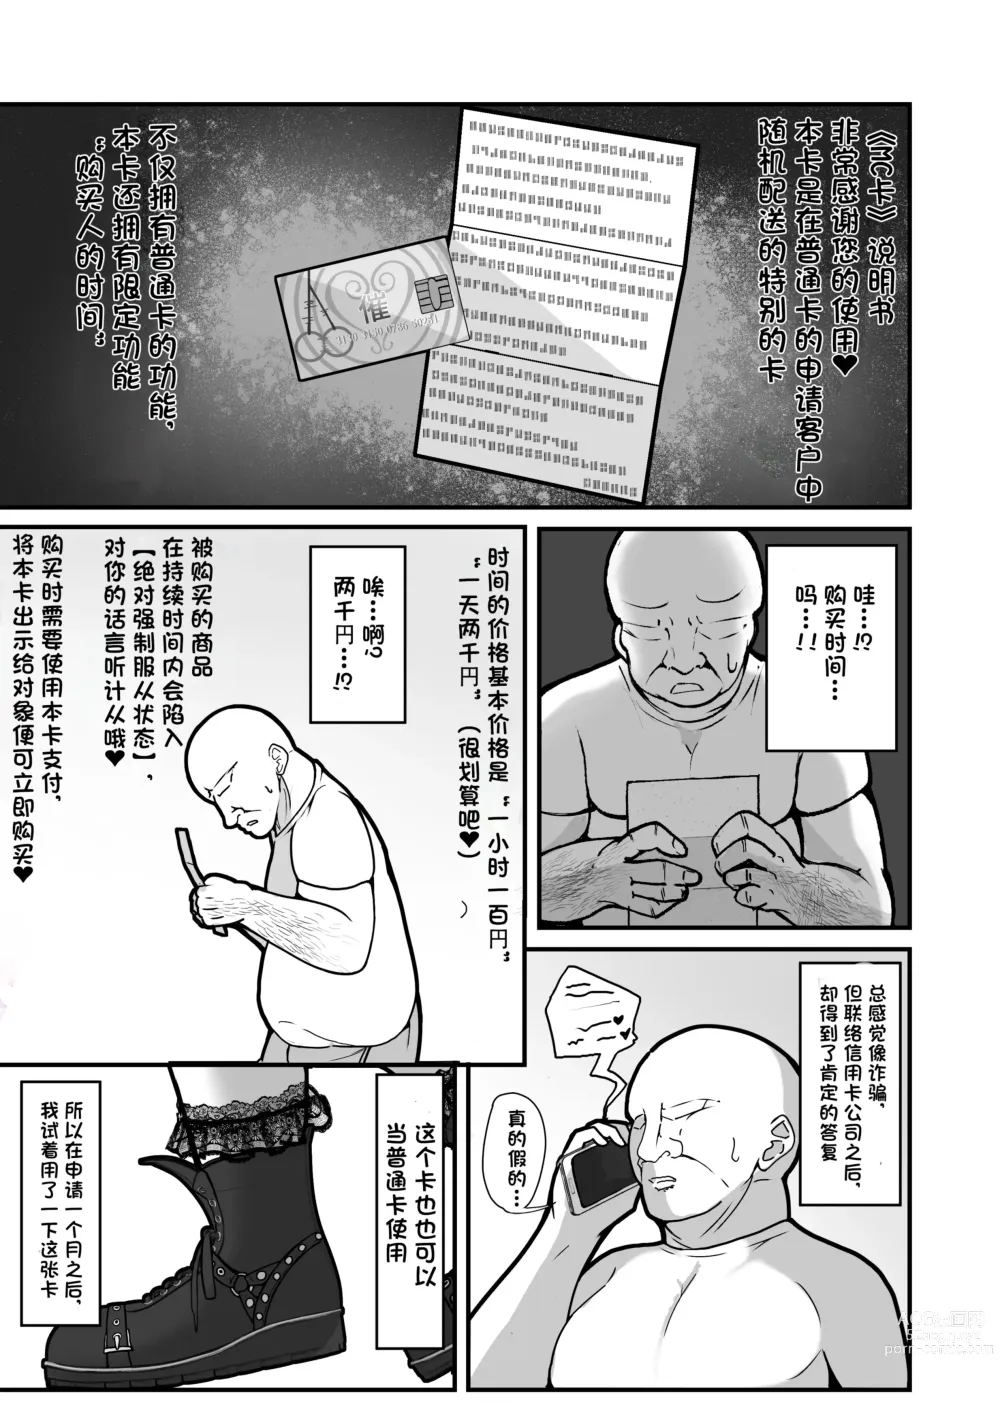 Page 5 of doujinshi Shiharai wa CreCa de!